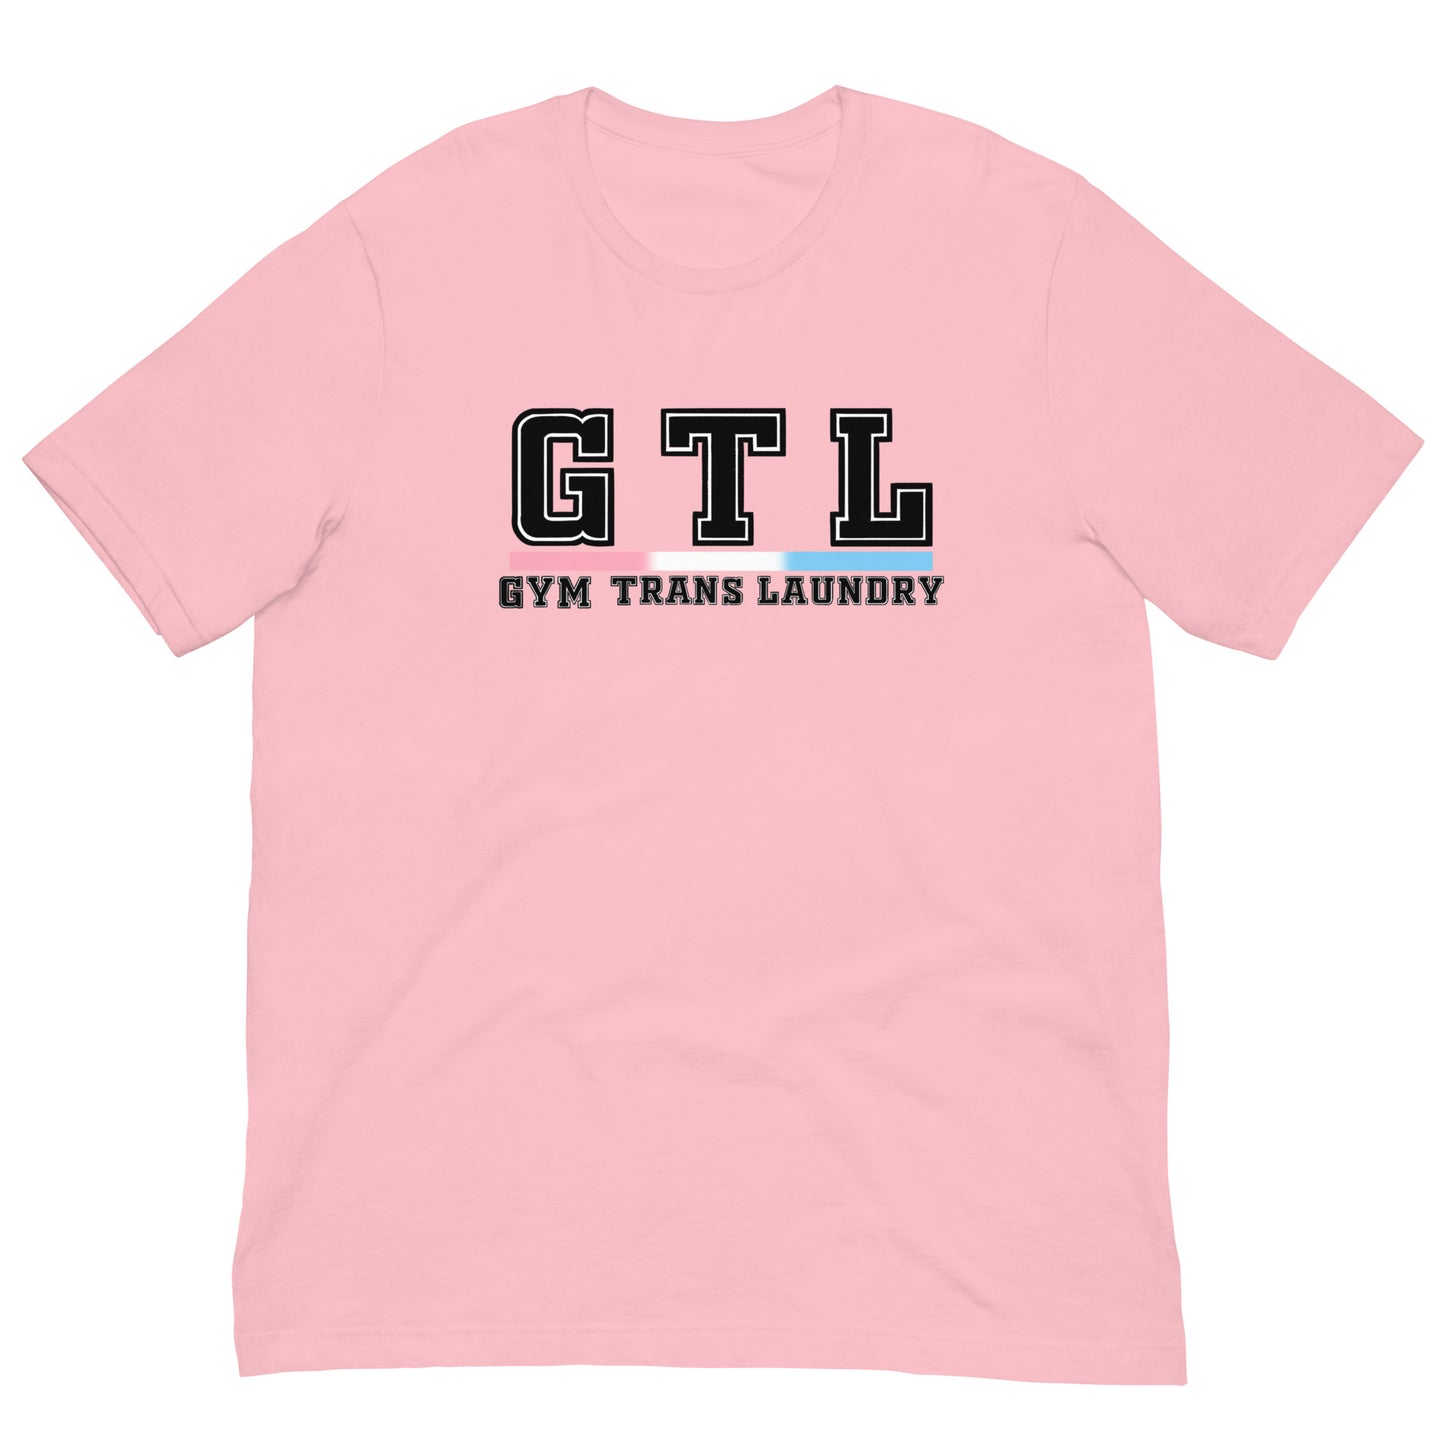 Gym Trans Laundry Tee (Black Text)